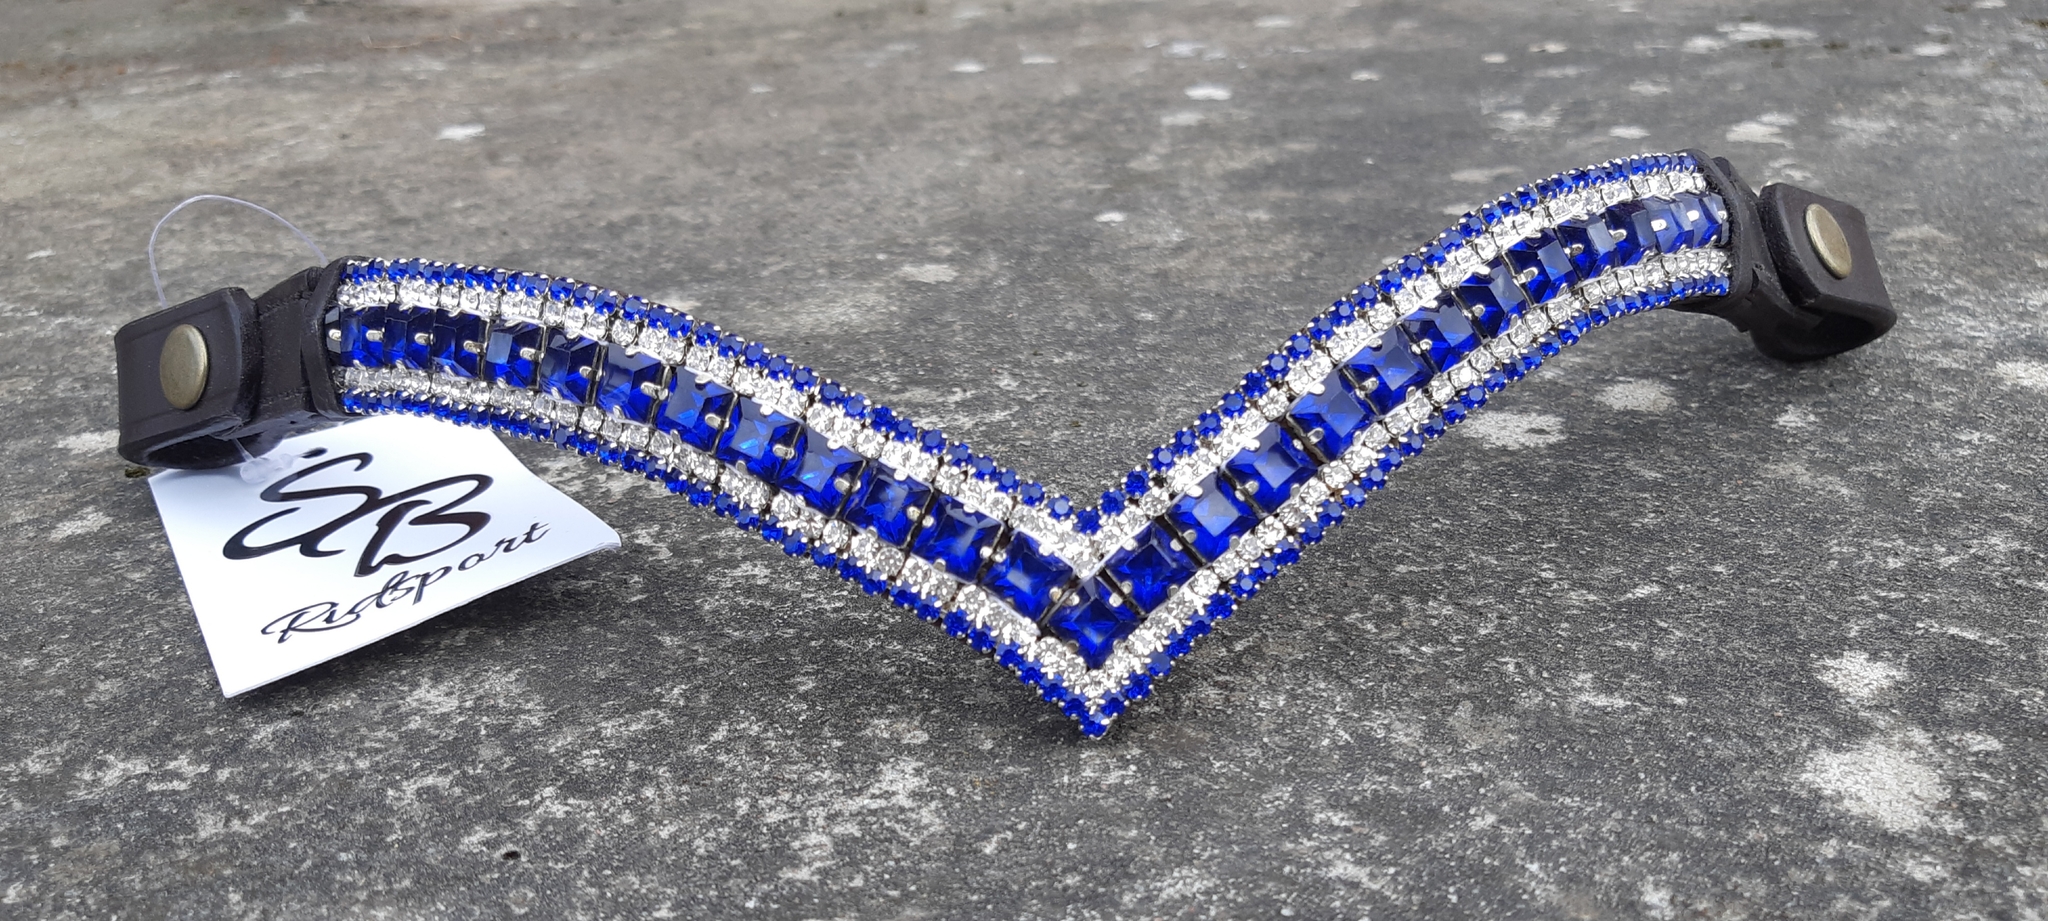 NI pannband blå/vit minishettis-shettis (flera färger)